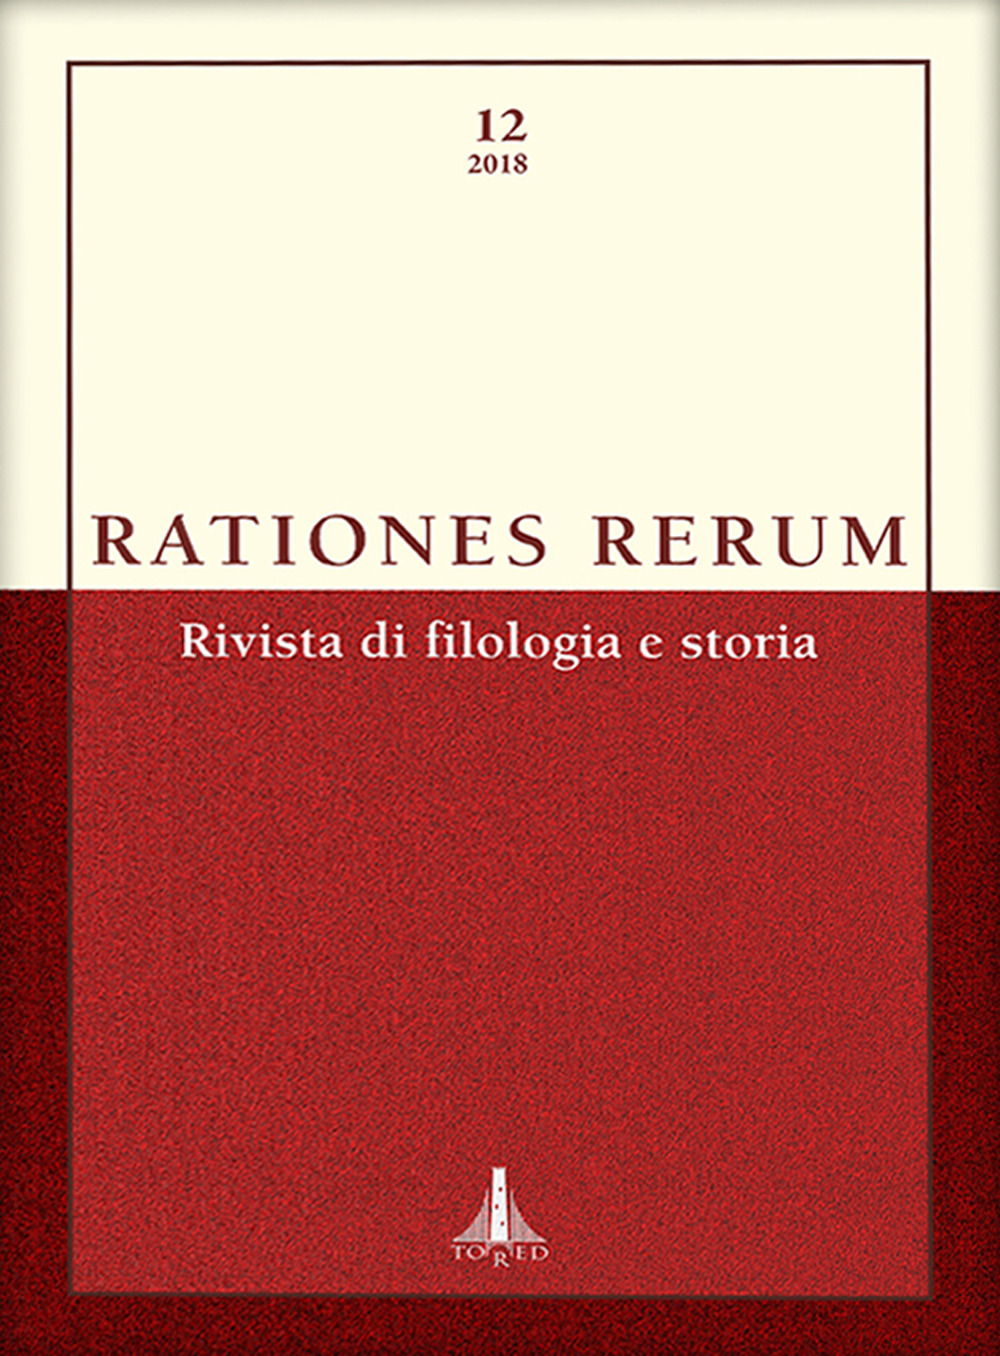 Rationes rerum. Rivista di filologia e storia. Ediz. multilingue. Vol. 12